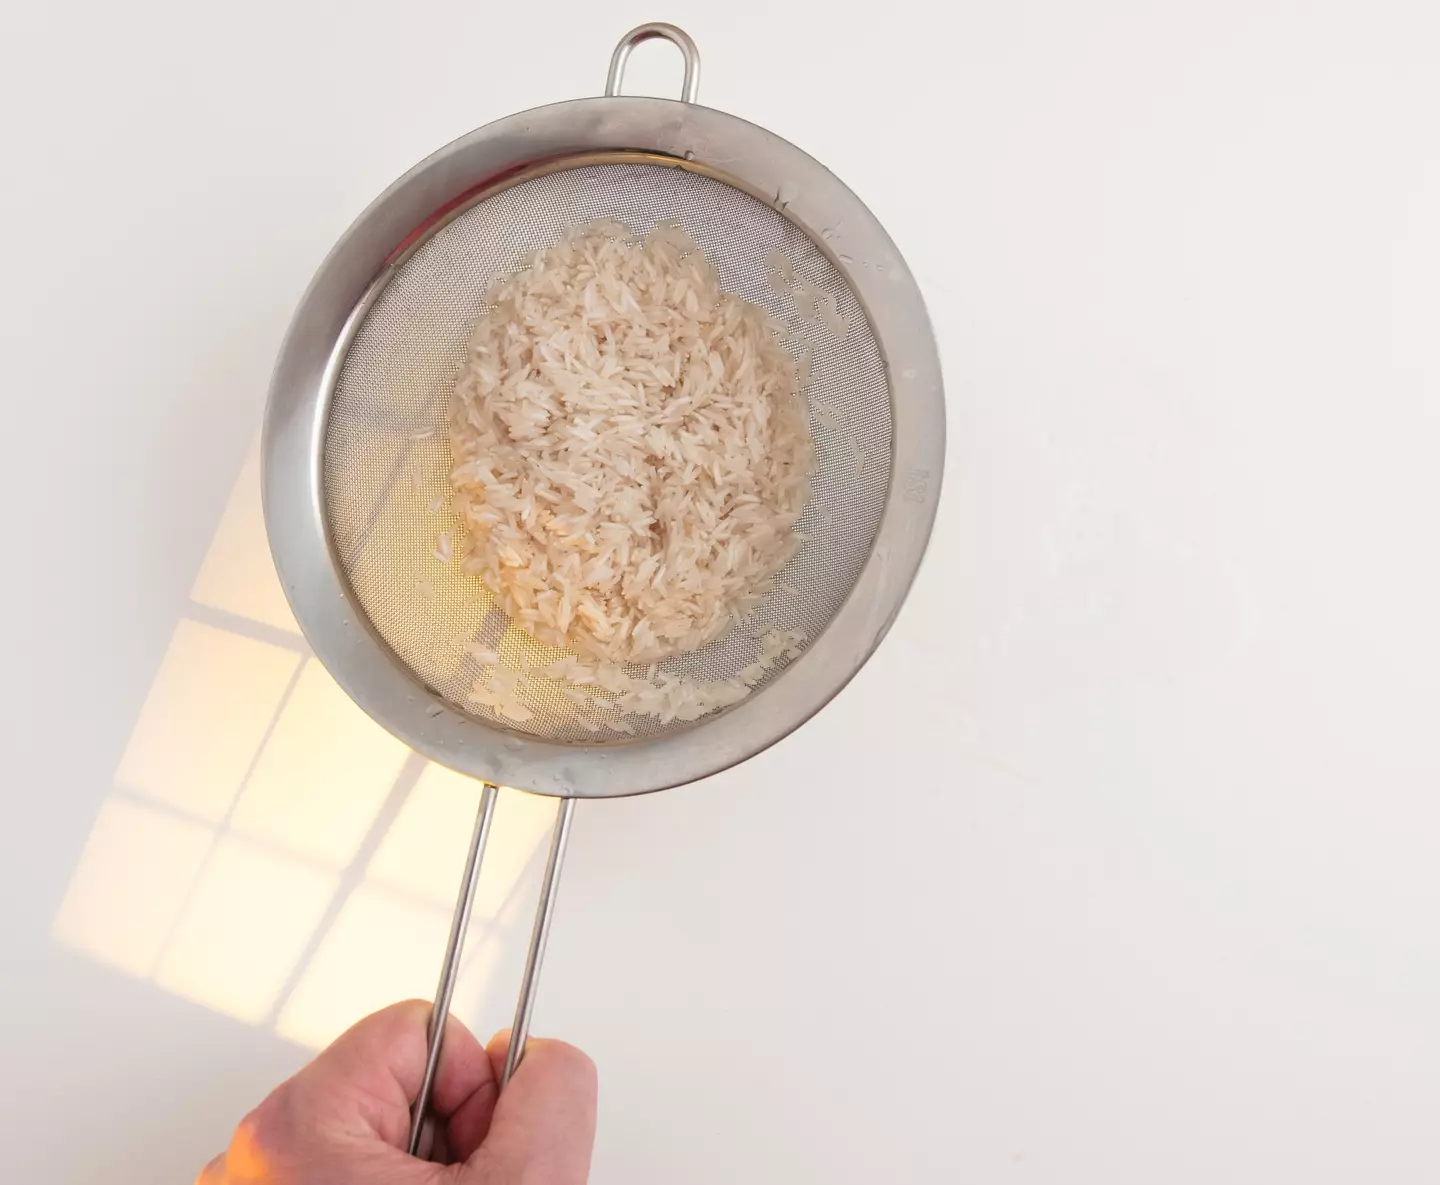 Can washing rice be useful?